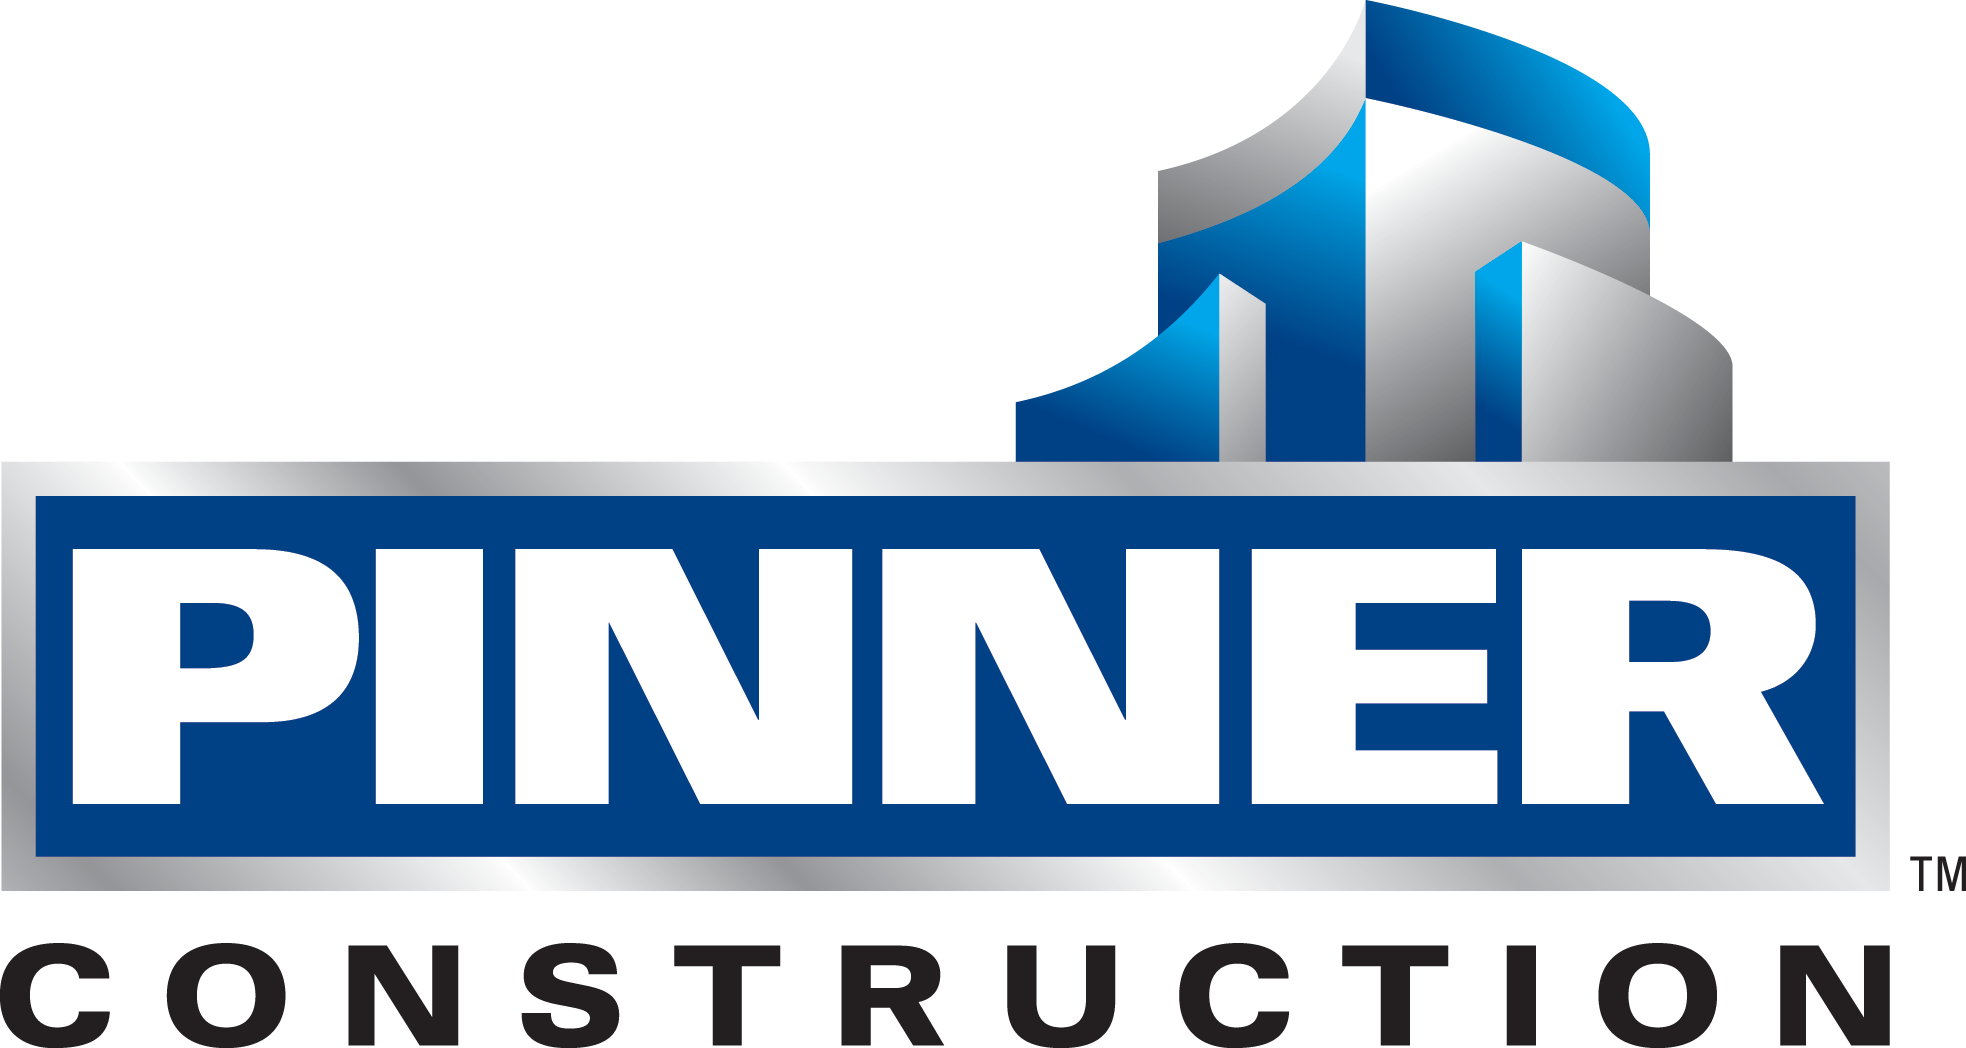 Pinner Construction Co., Inc. logo